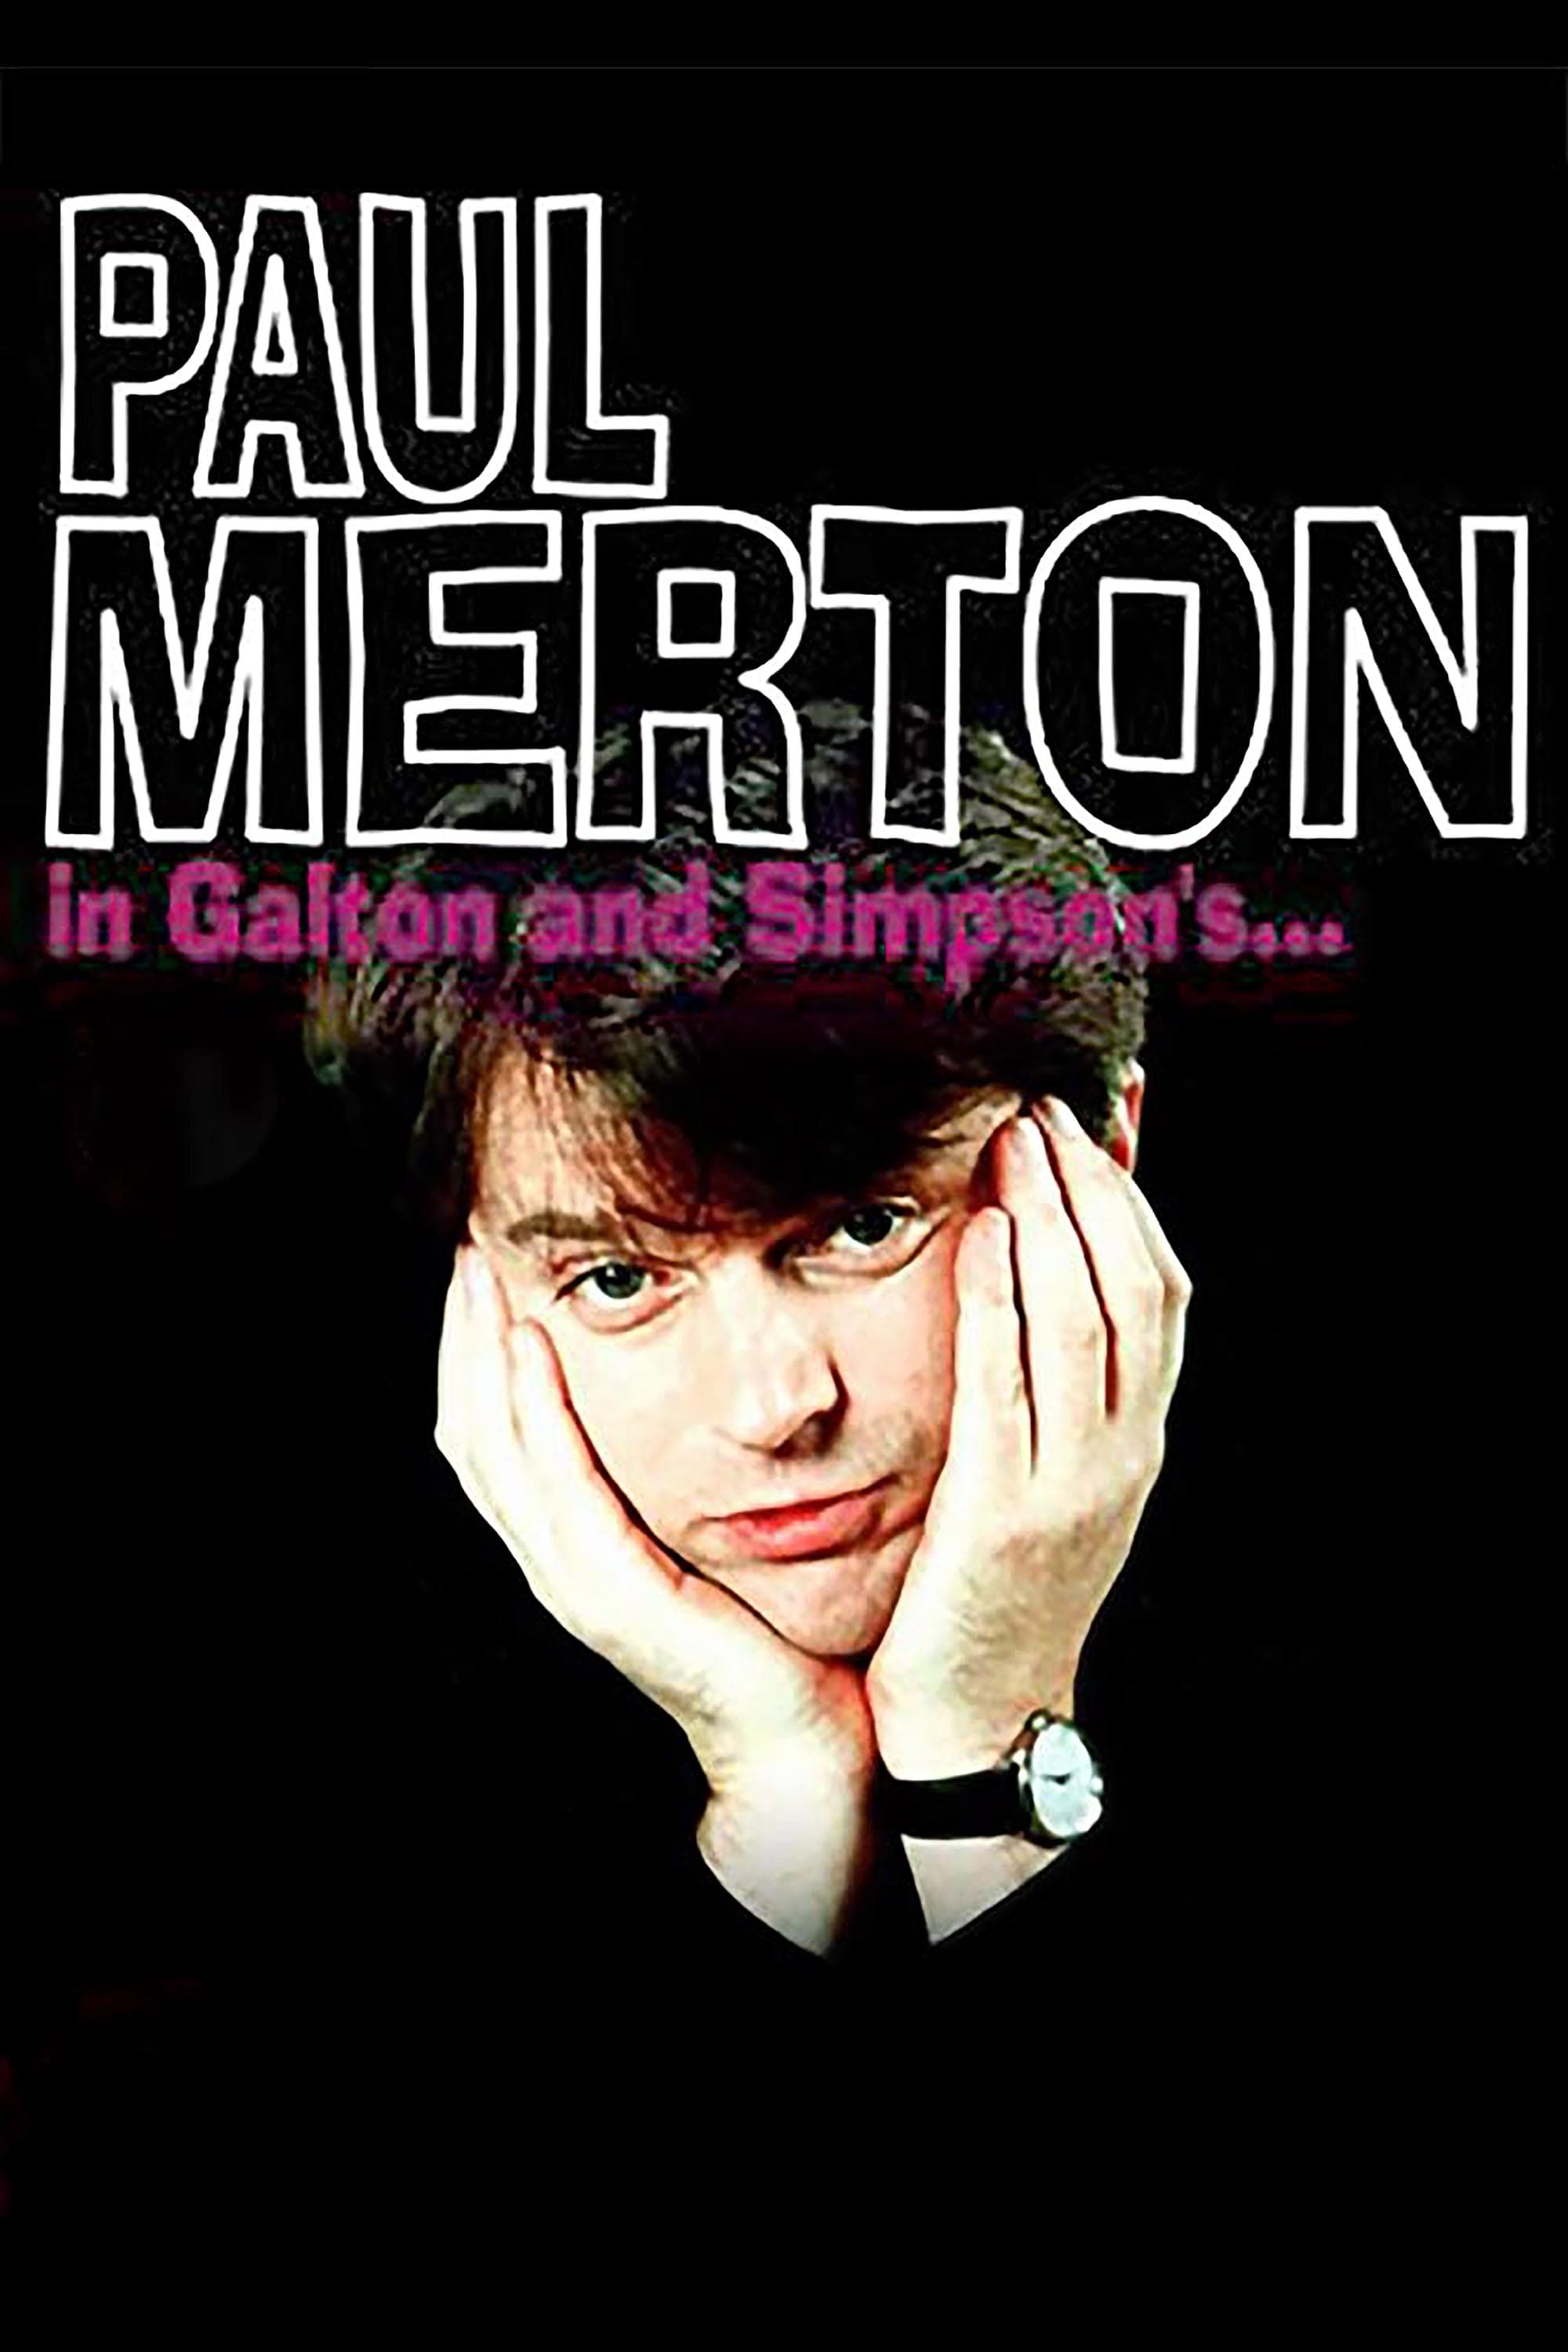 Paul Merton in Galton & Simpson's